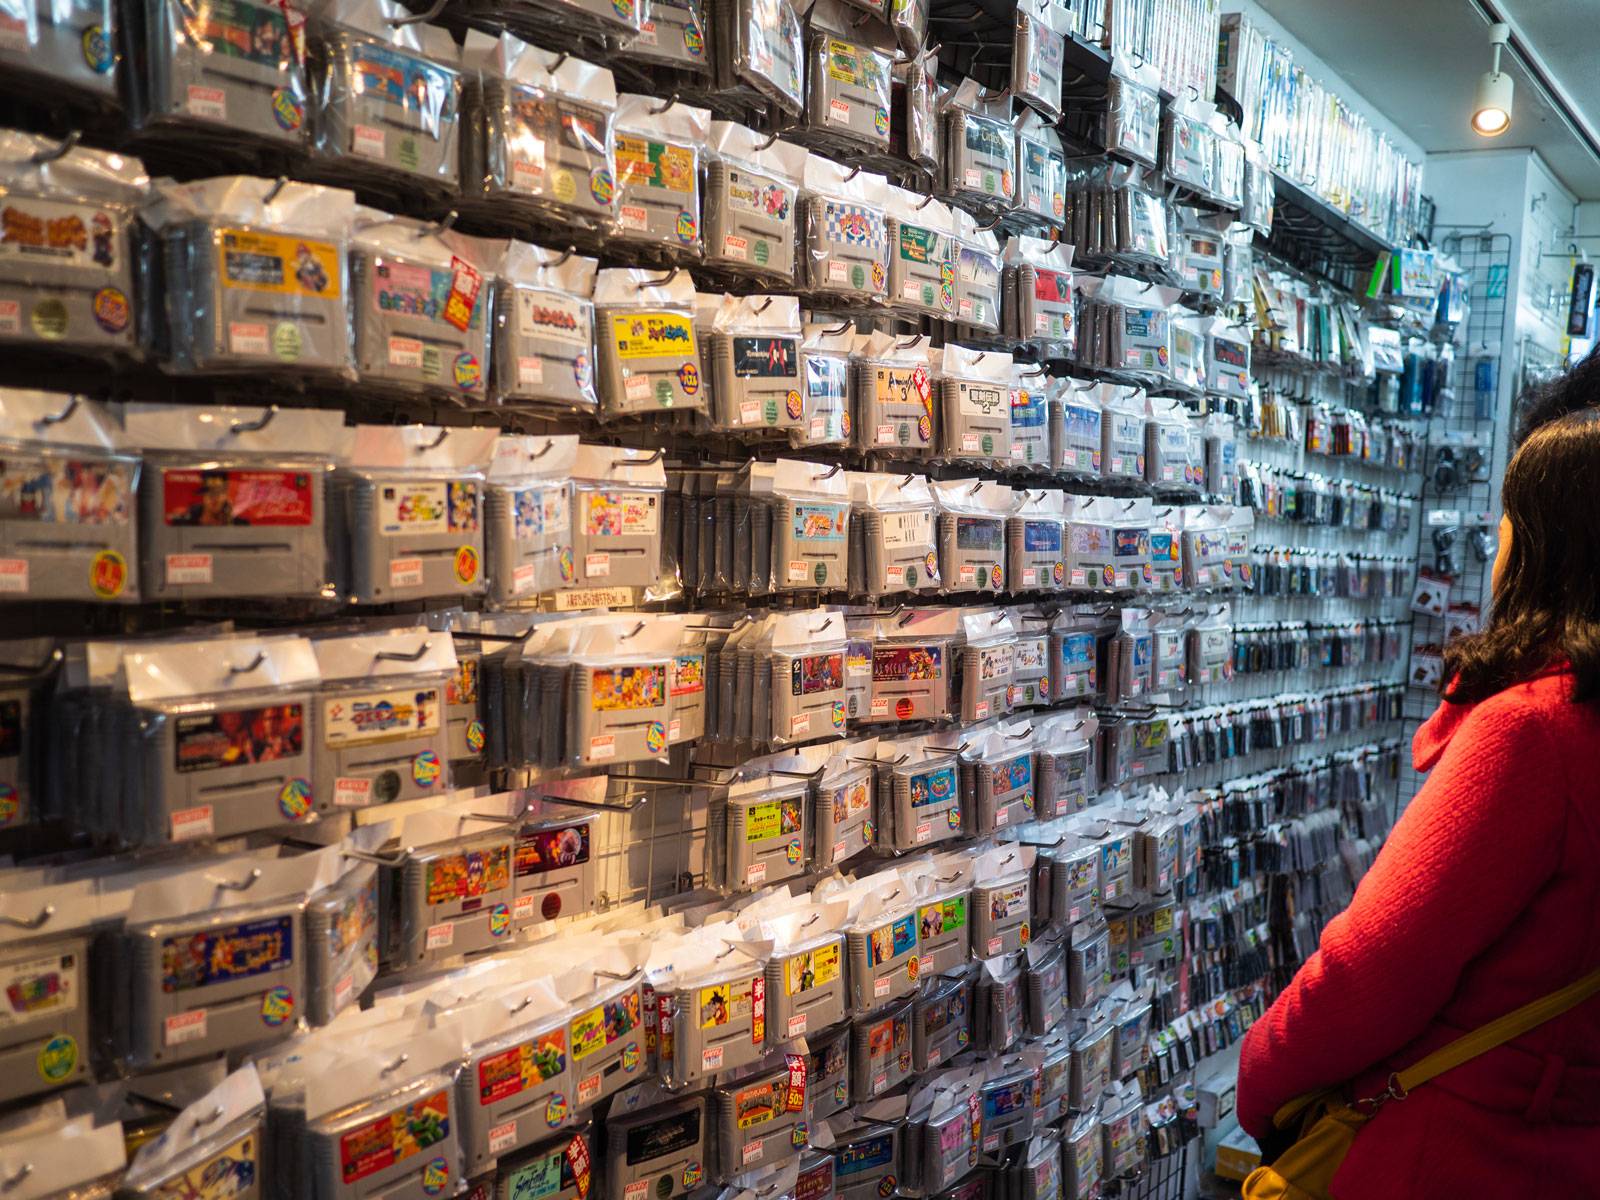 A wall of secondhand Super Nintendo cartridges